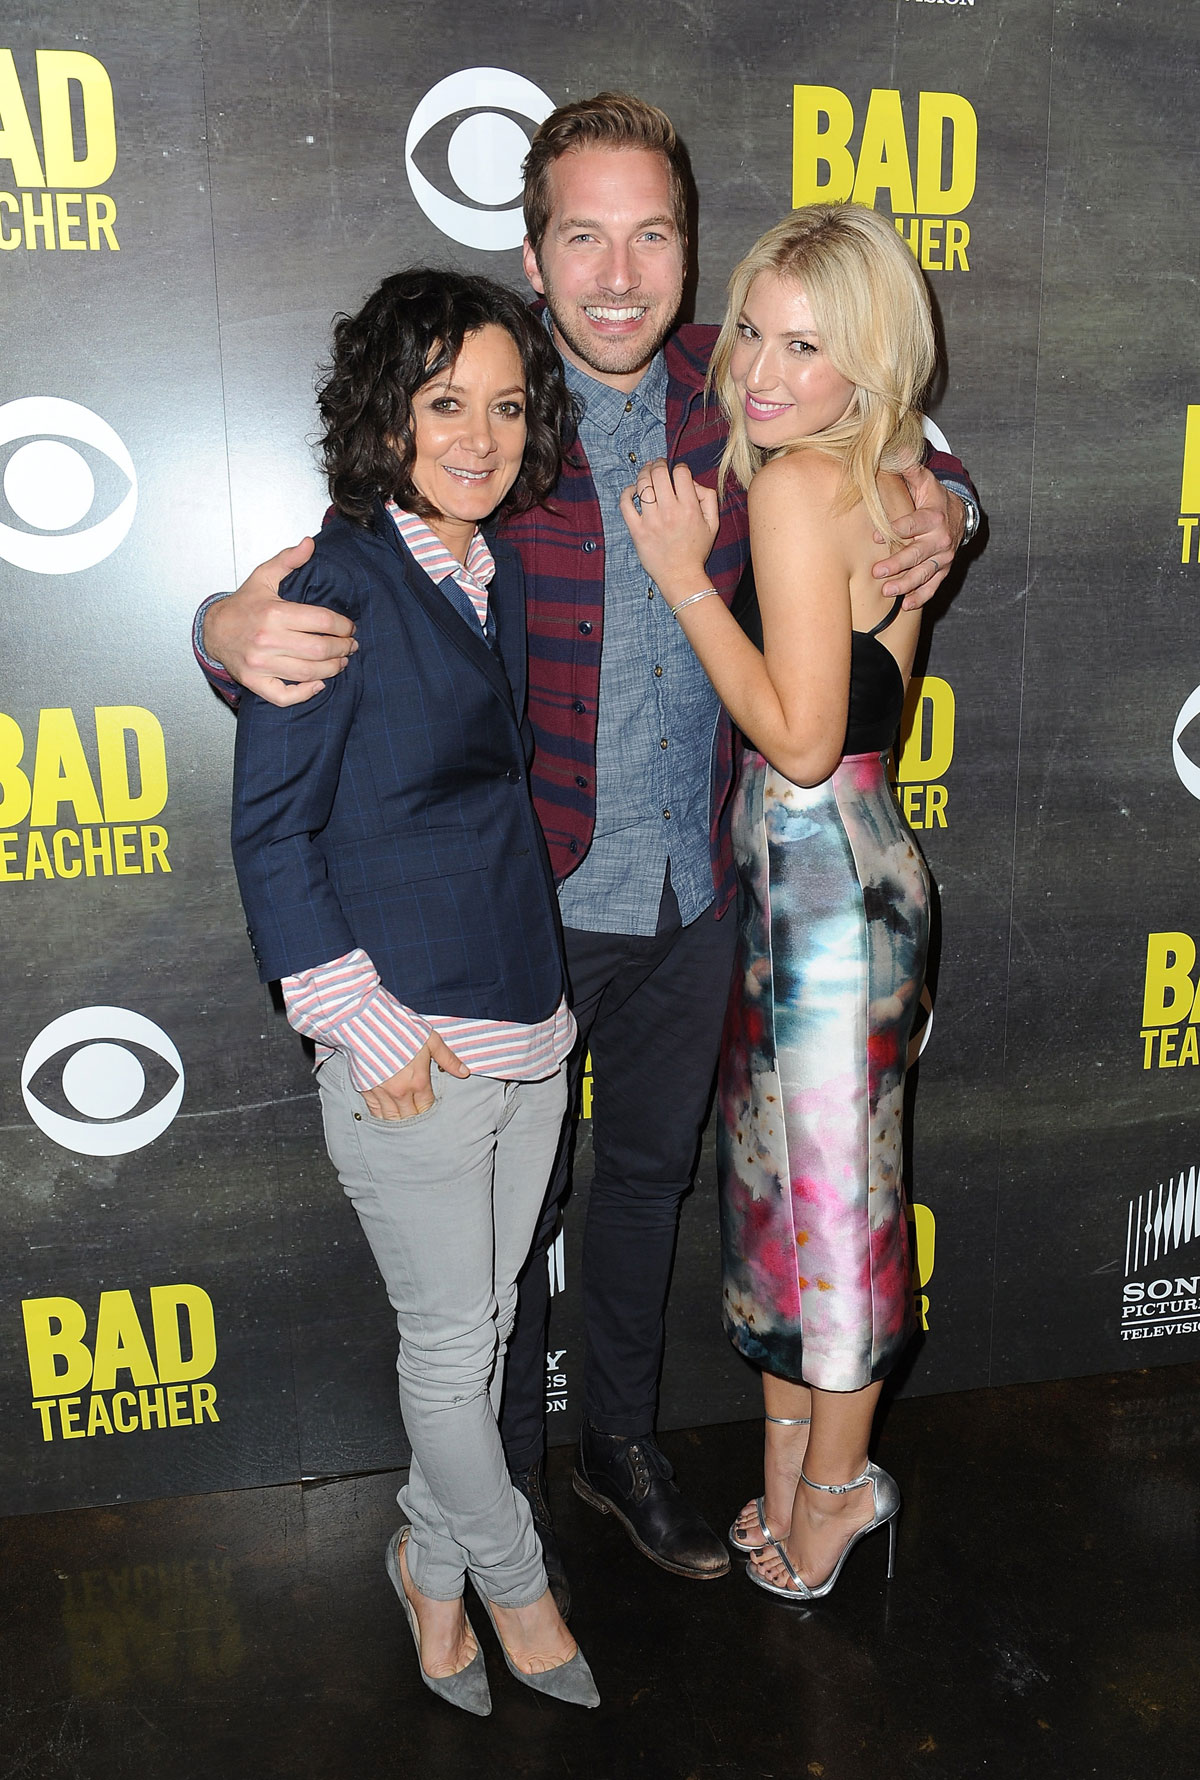 Ari Graynor attends CBS & Sony premiere event of Bad Teacher